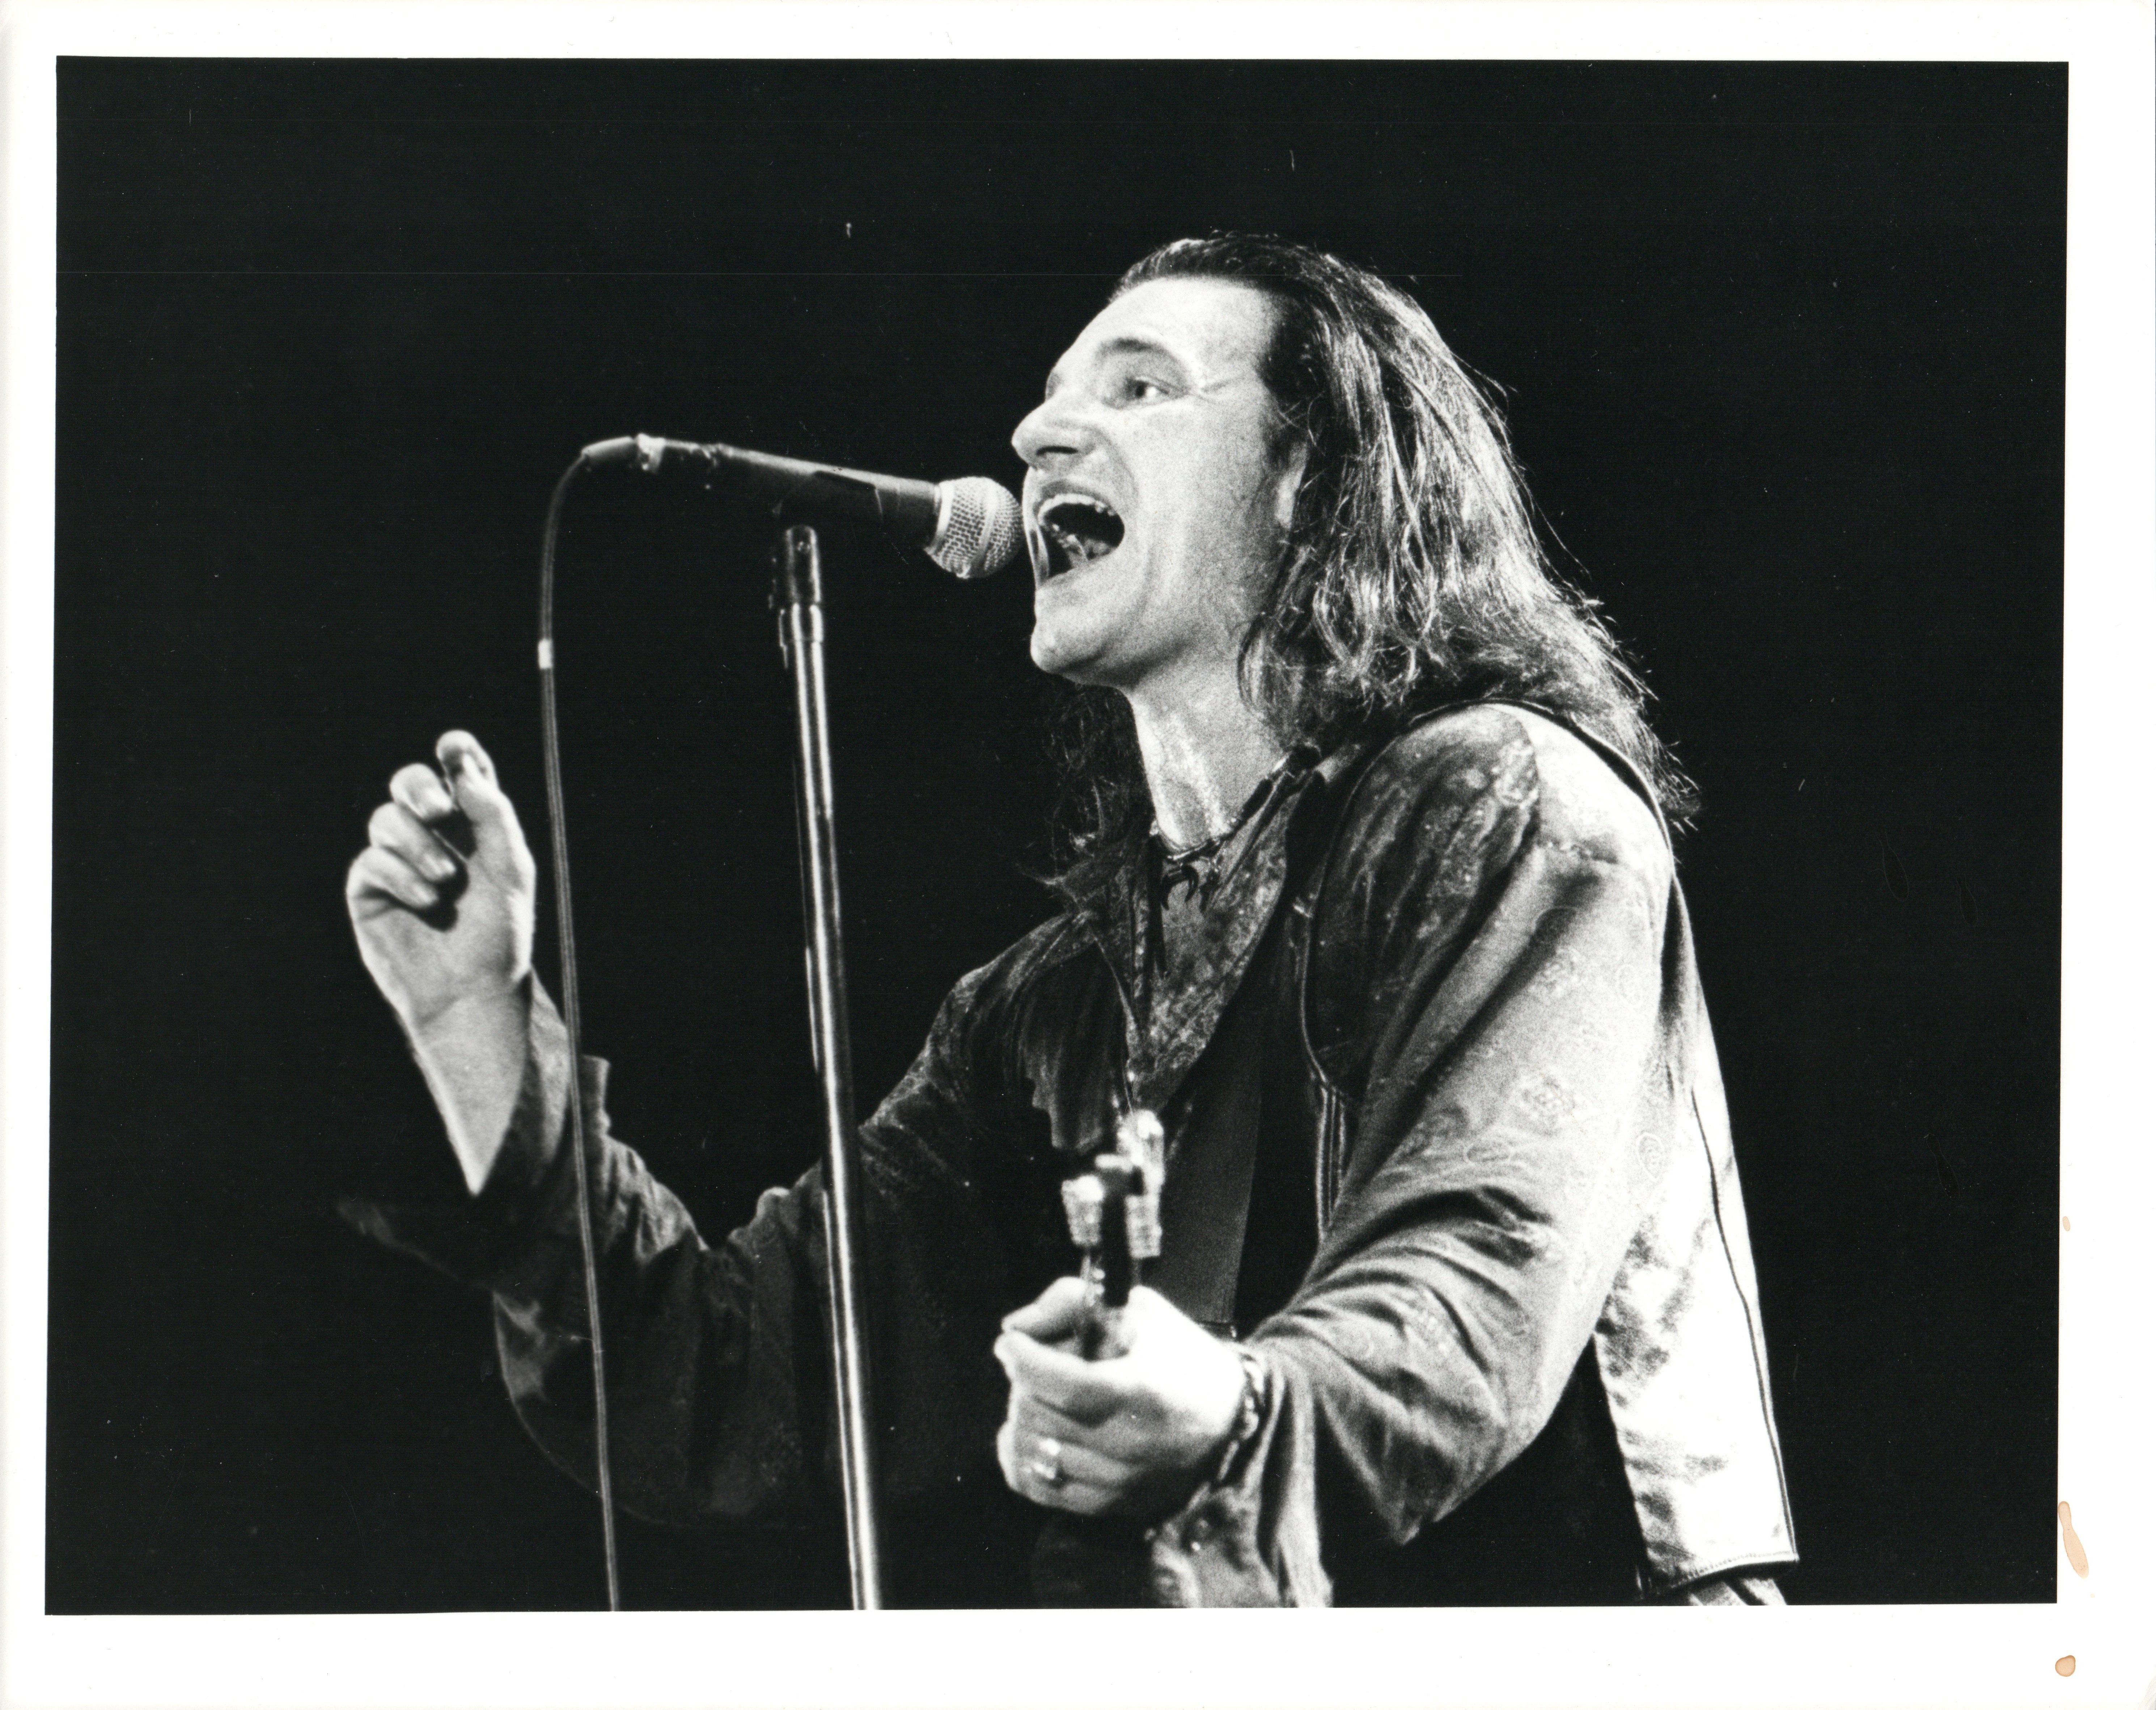 Anastasia Pantsios Black and White Photograph - Bono Singing Passionately on Stage Vintage Original Photograph